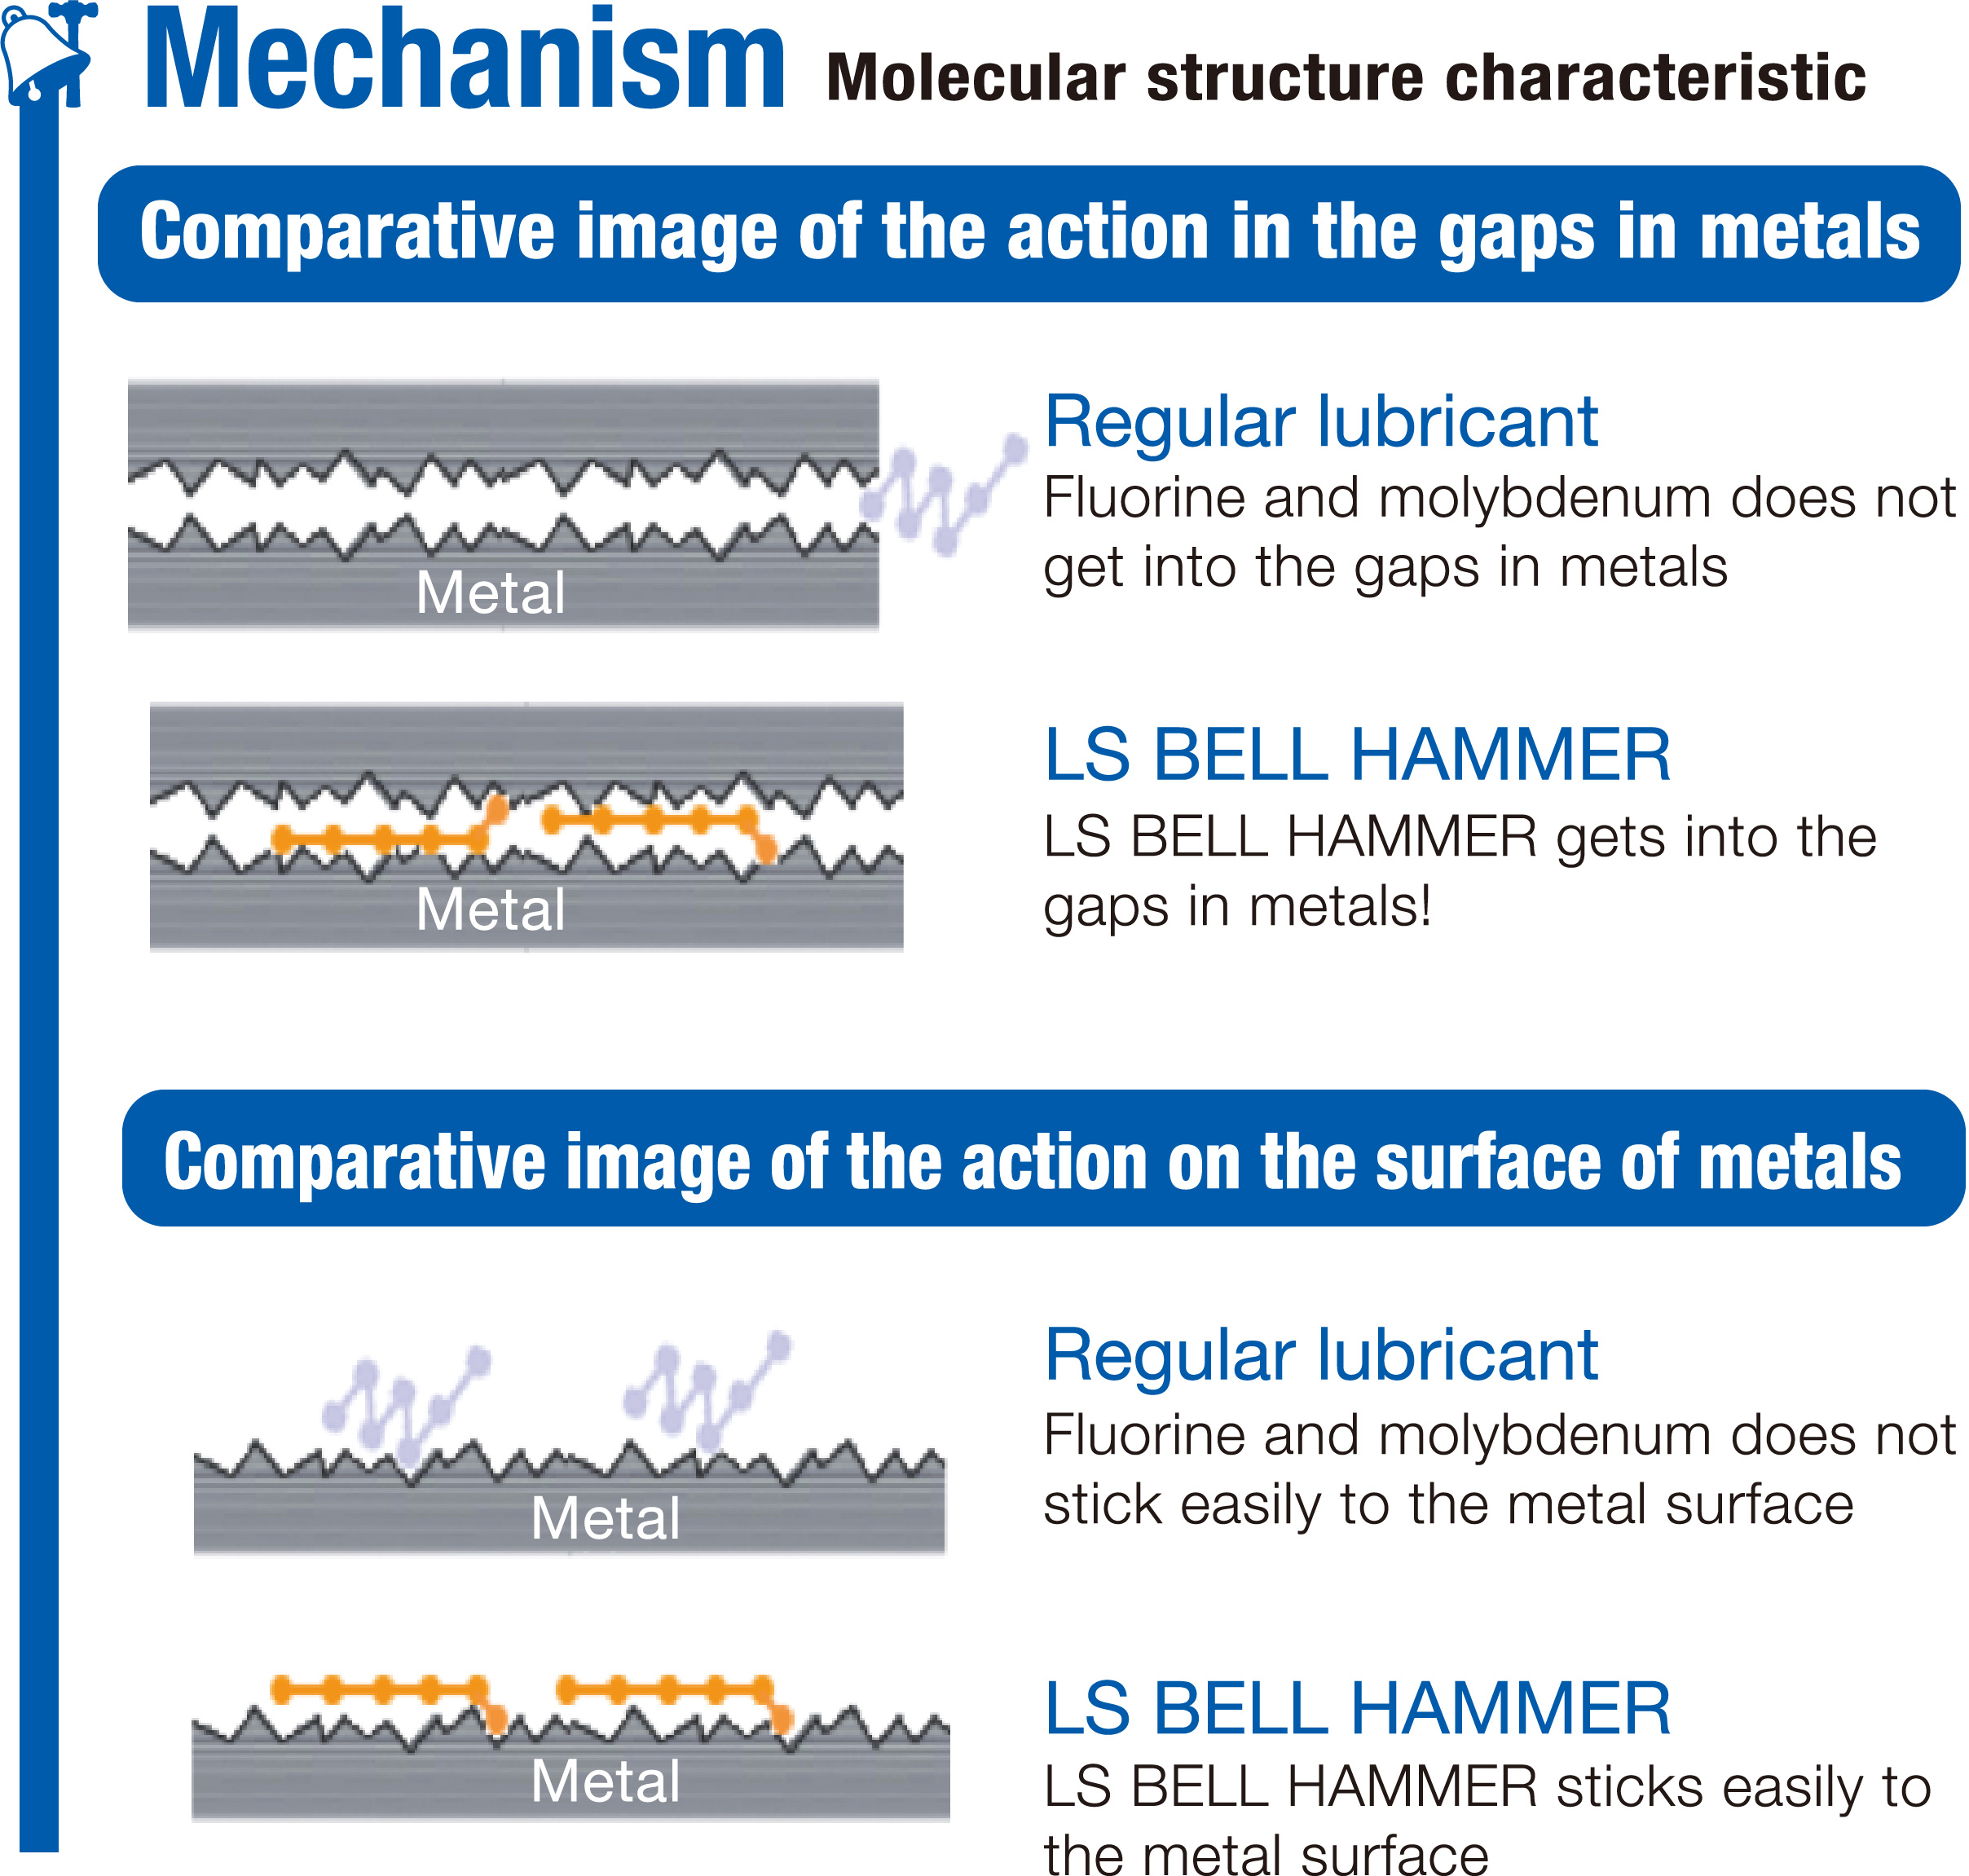 Mechanism - Molecular structure characteristic of LS BELL HAMMER